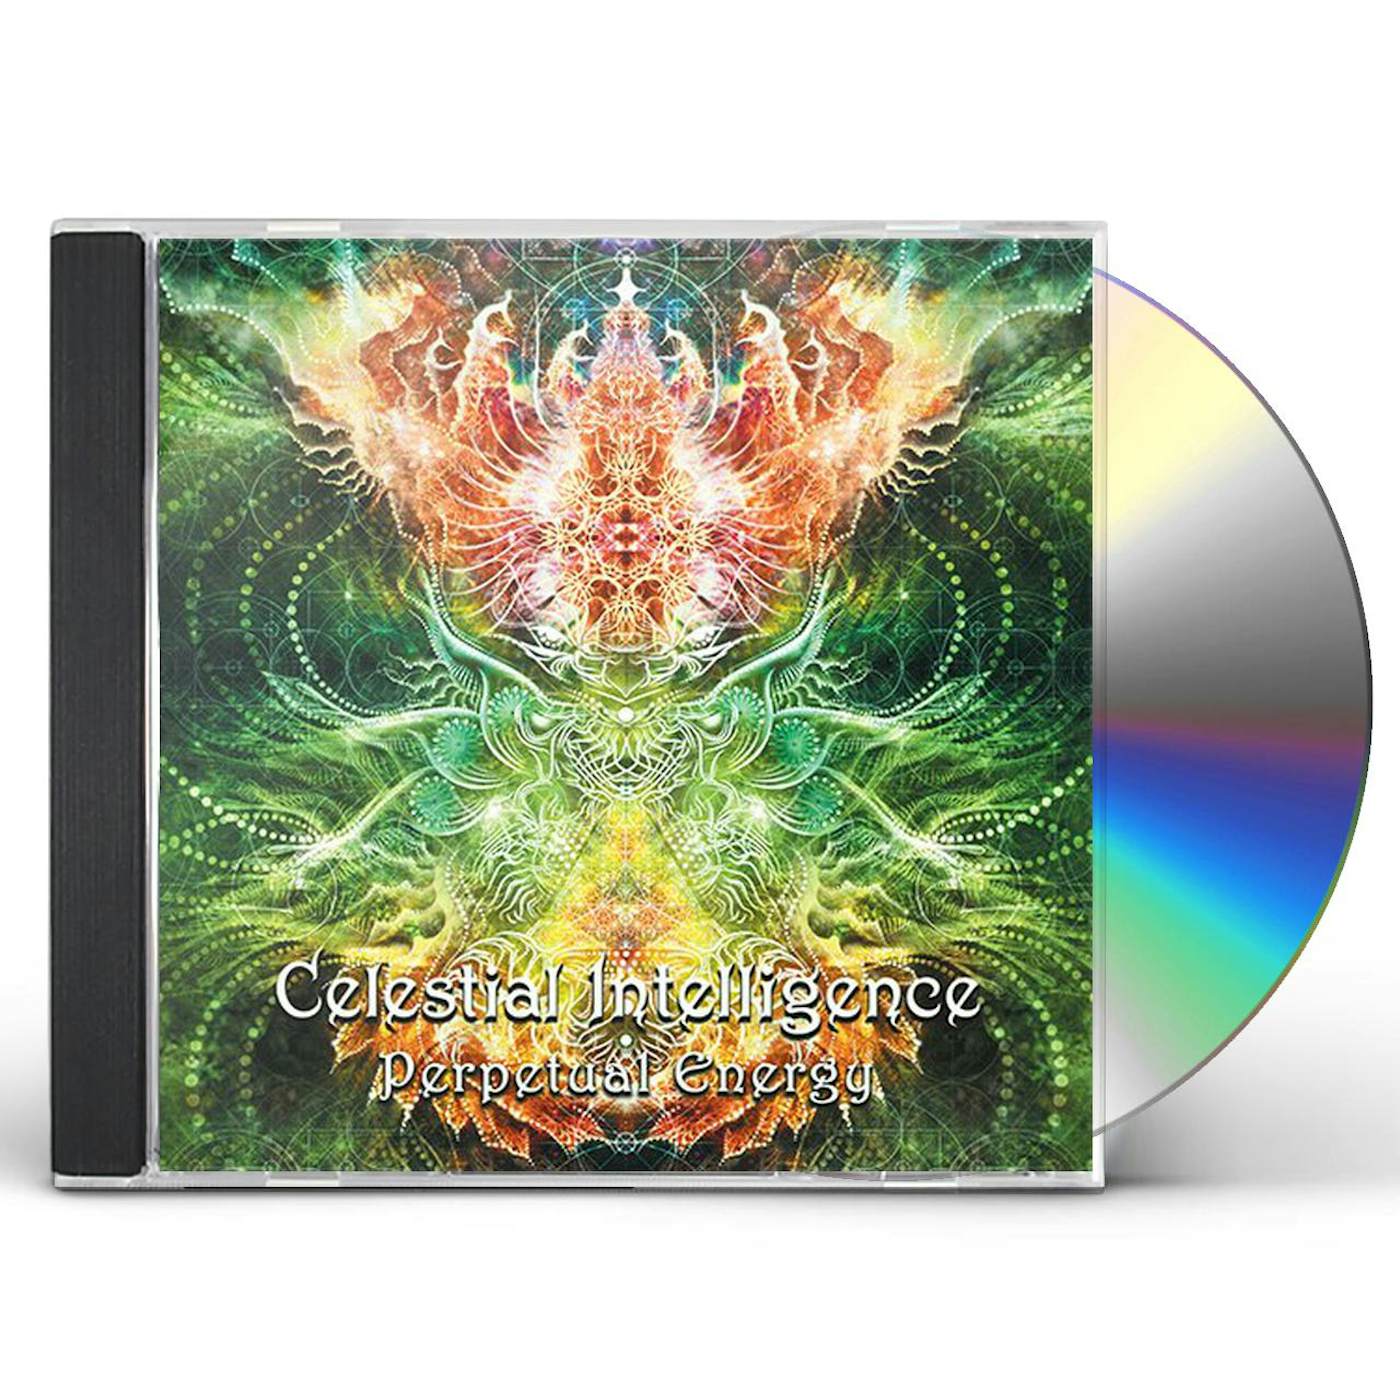 Celestial Intelligence PERPETUAL ENERGY CD